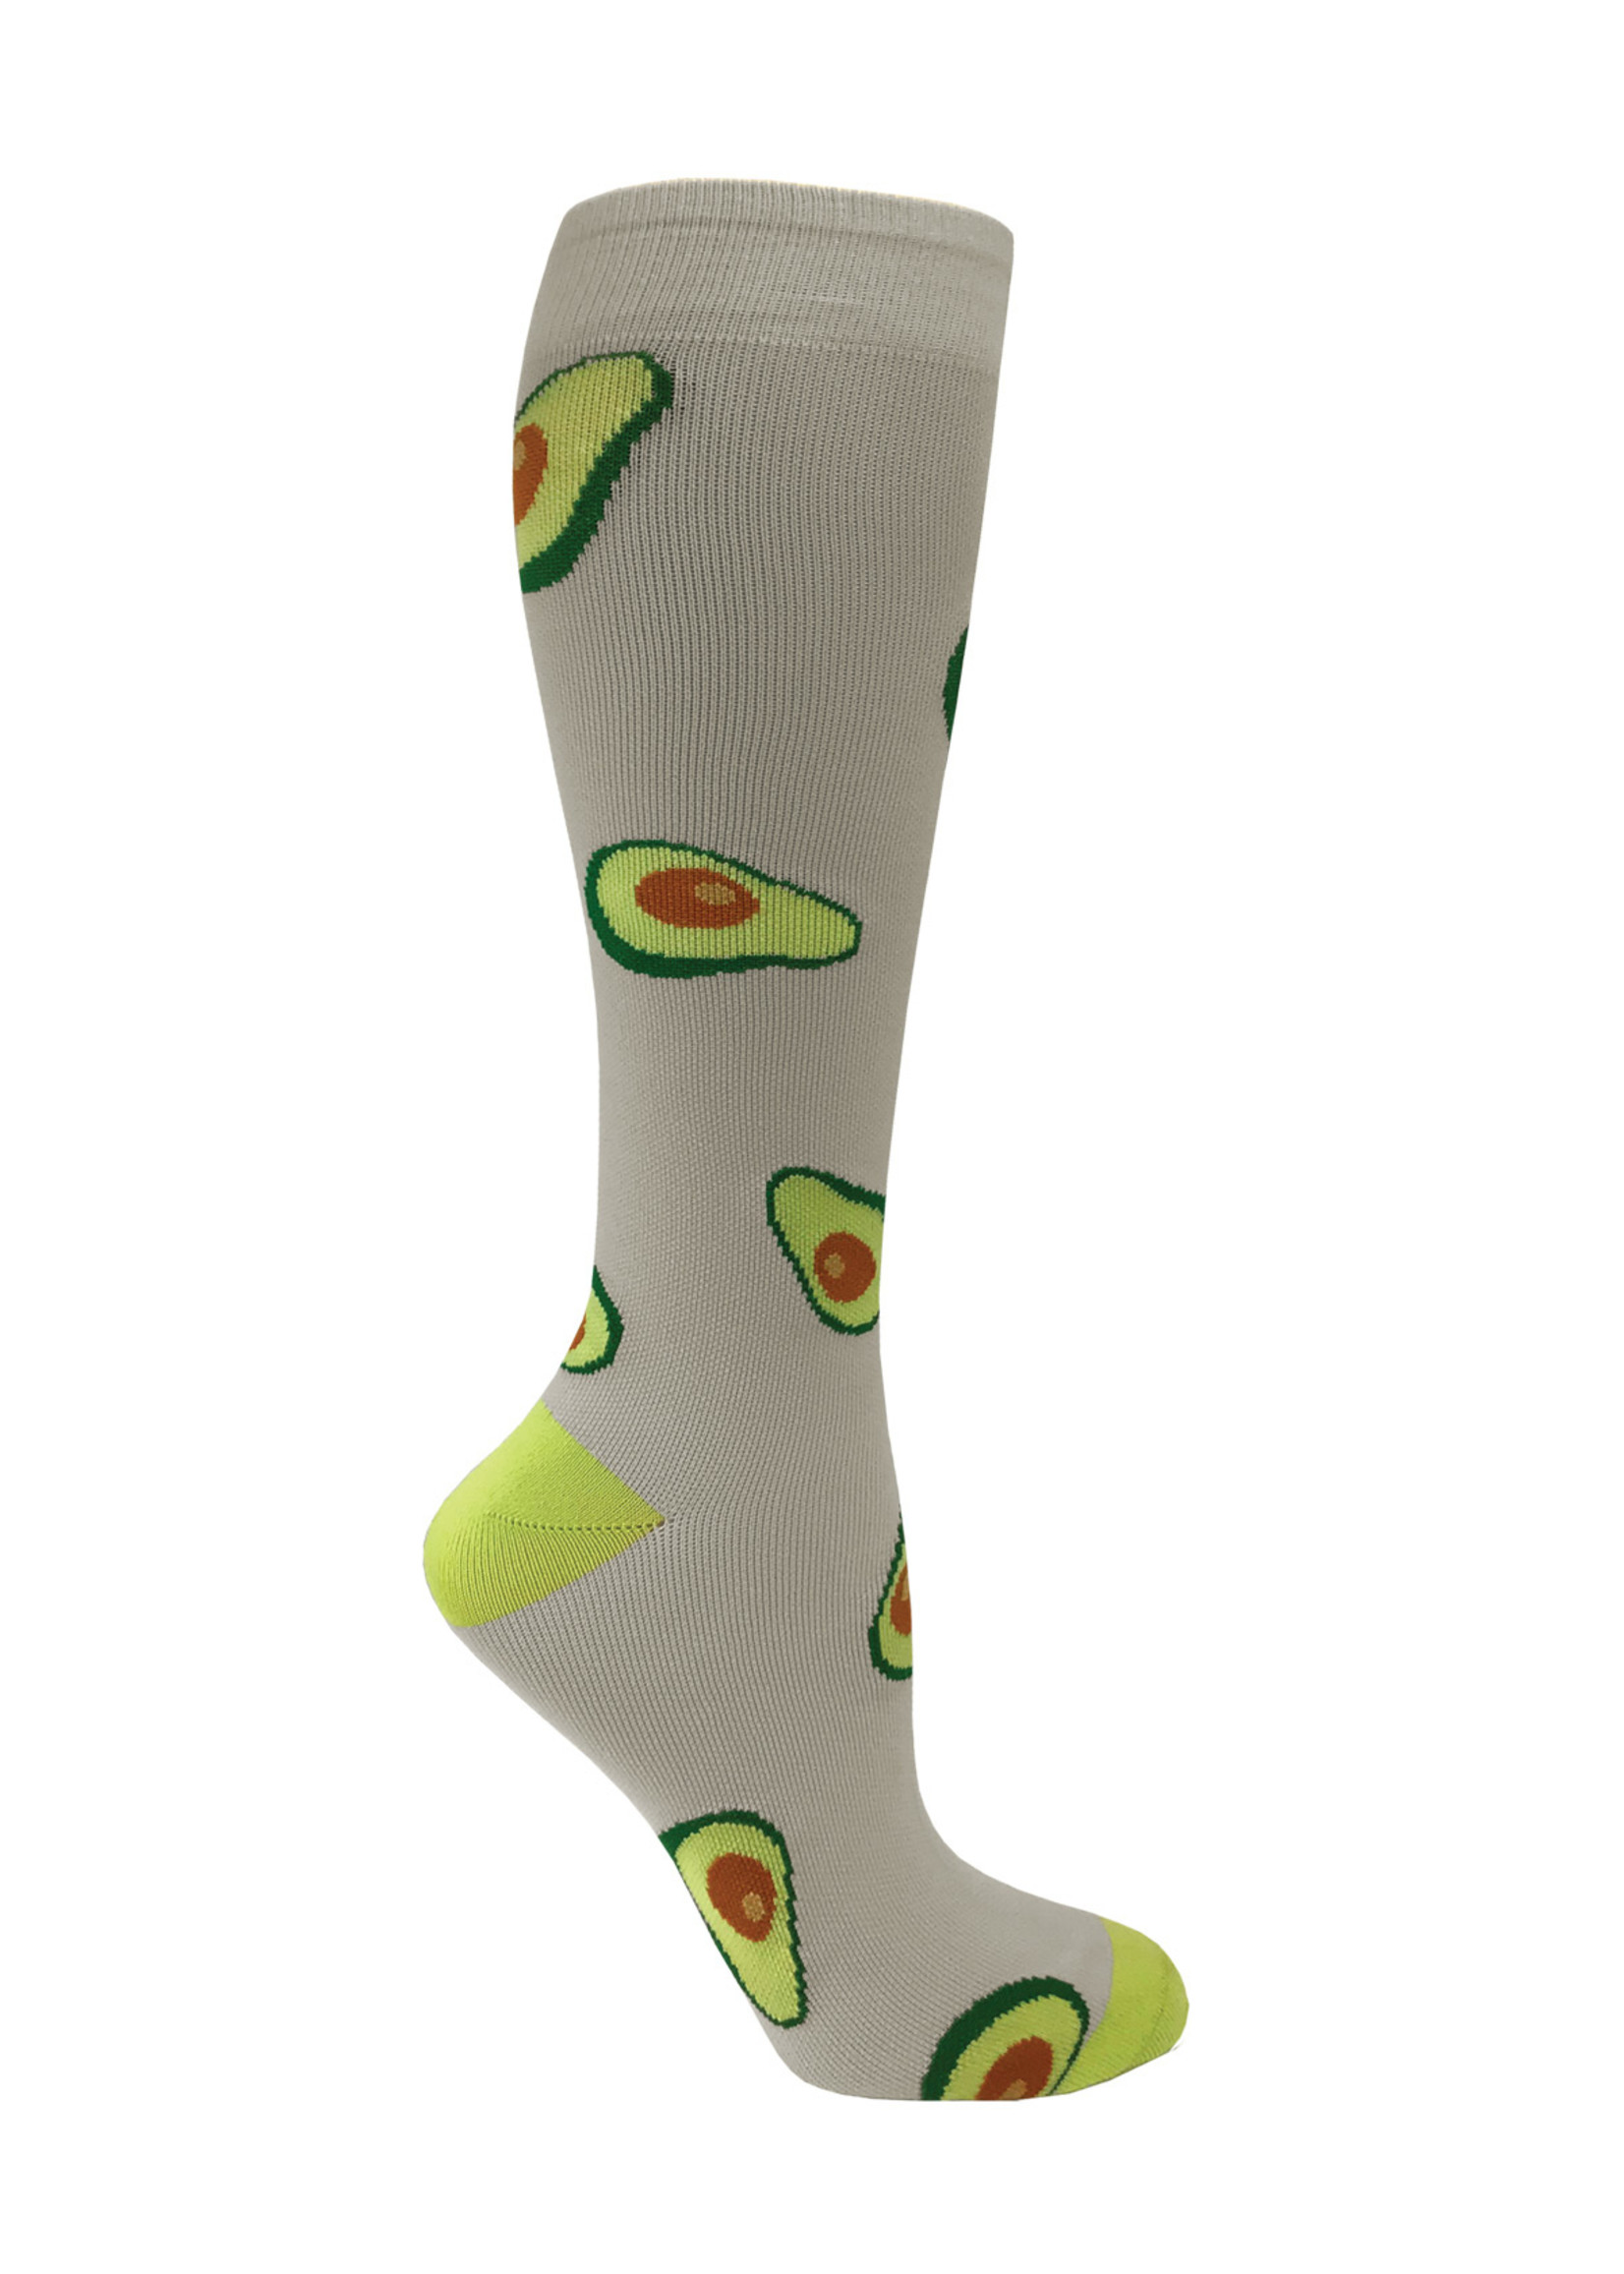 Prestige Medical PM 386 Premium Compression Sock 15-18mmHg Avocado